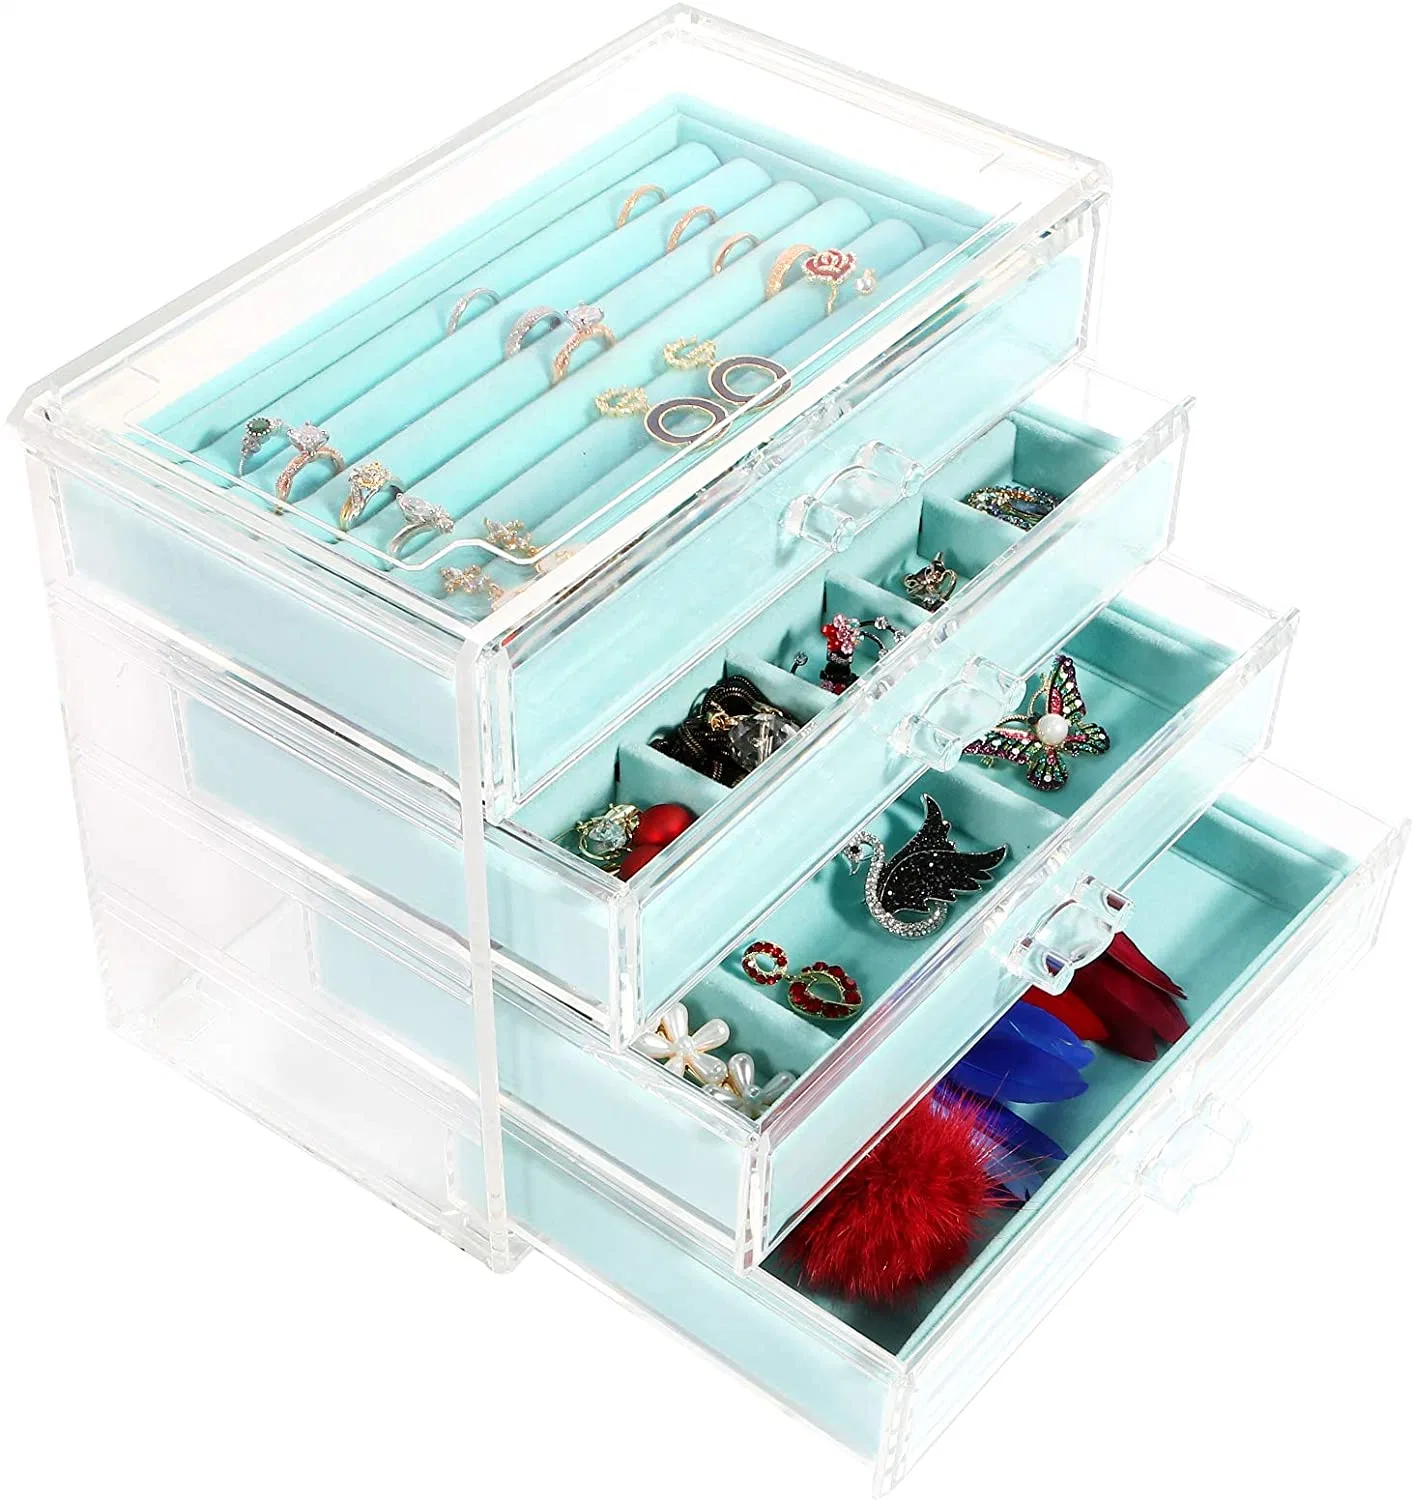 Acrylic Jewelry Box Jewelry Organizer Earring Rings Necklaces Display Storage Case